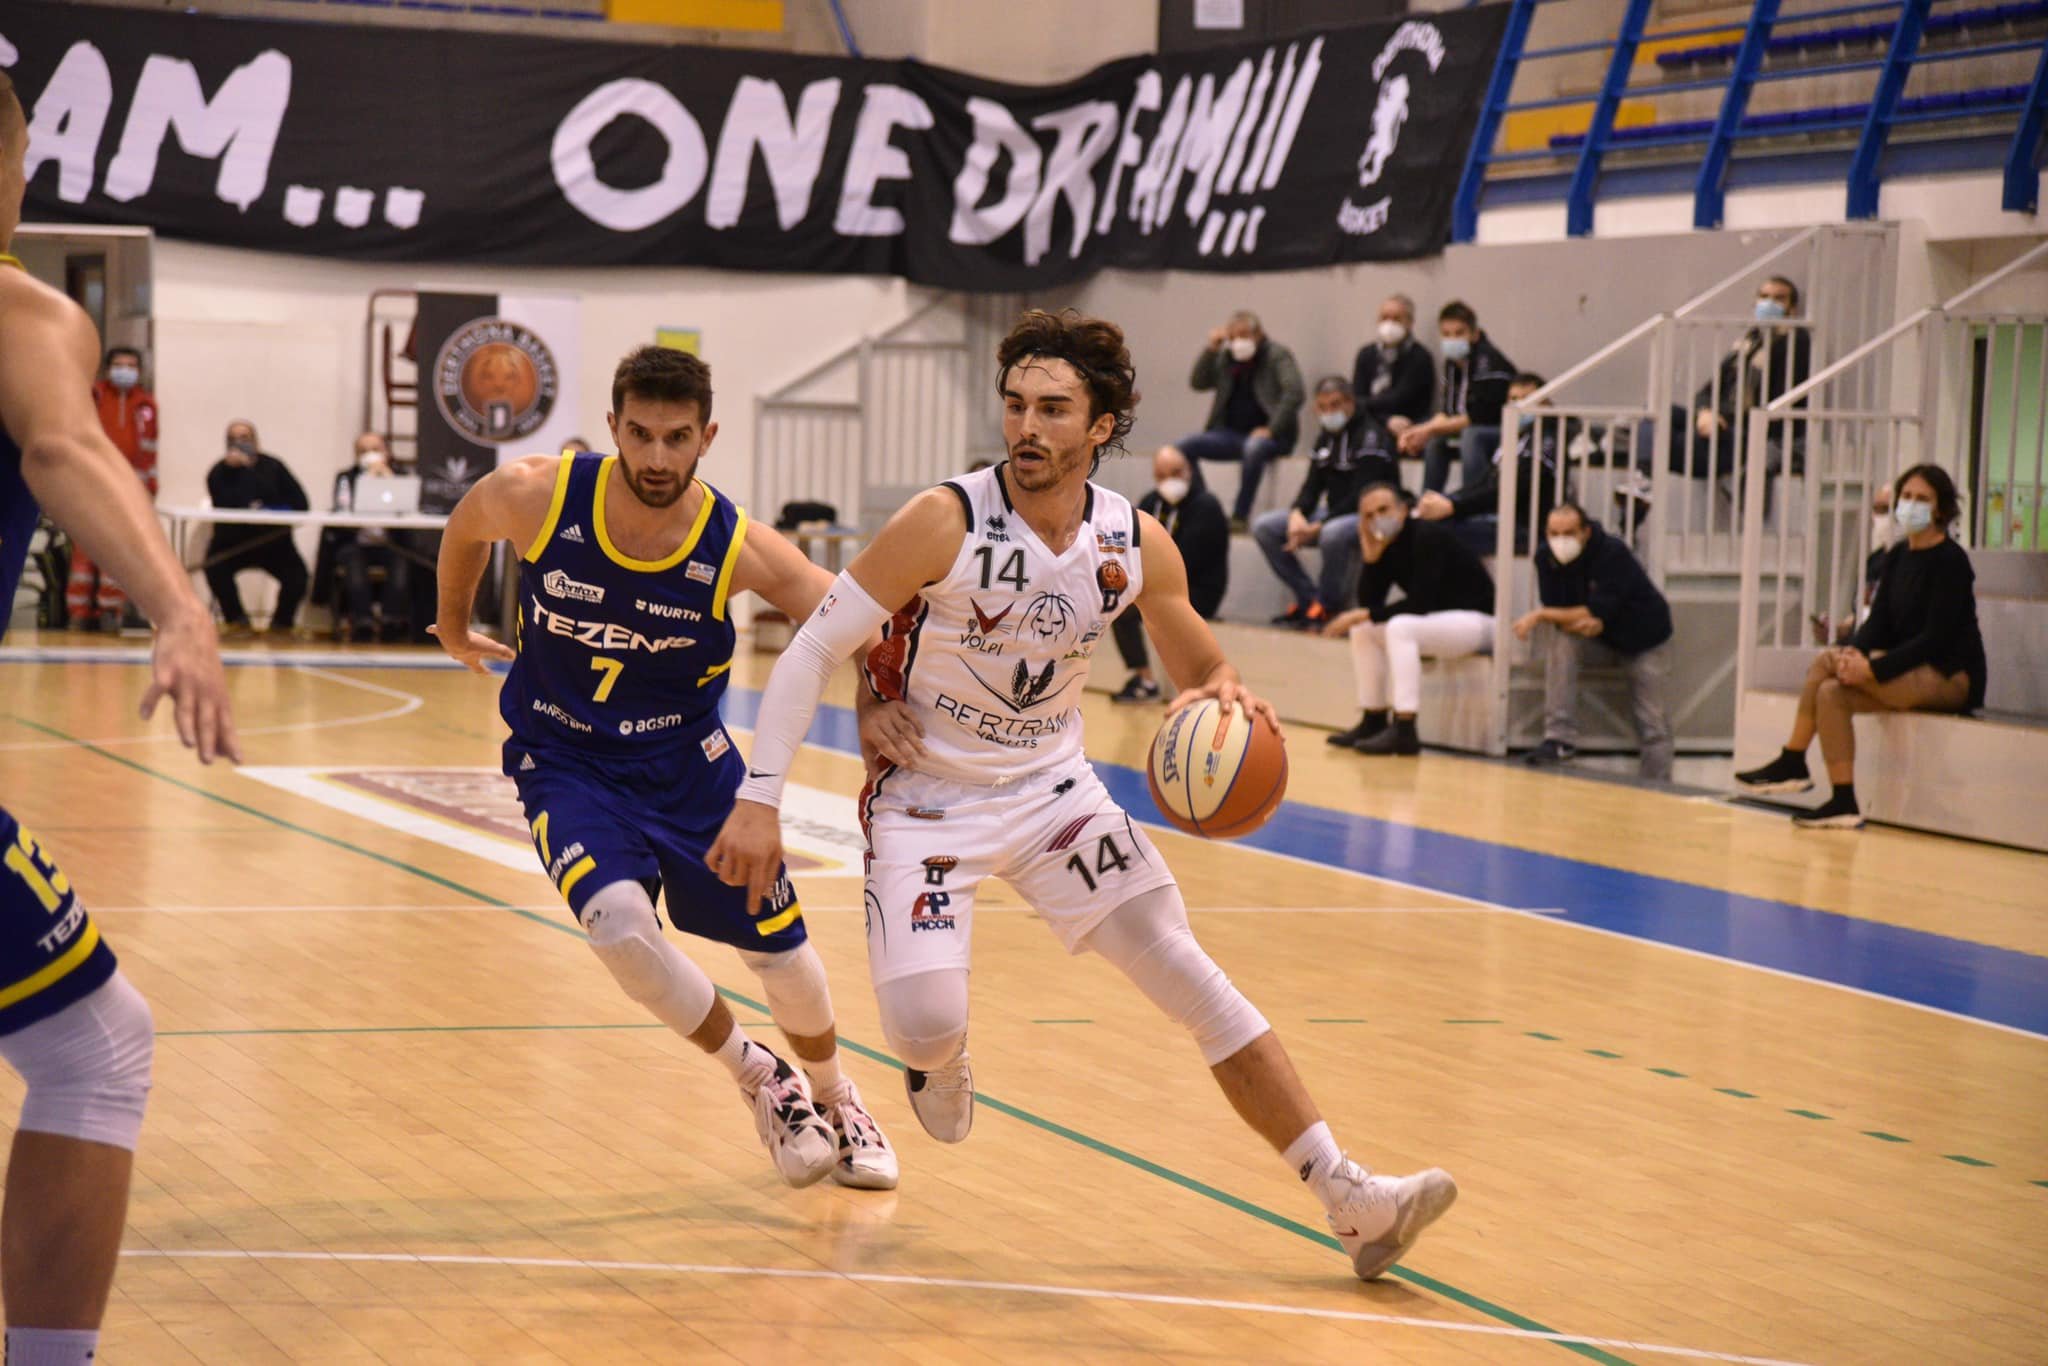 Basket: domenica Bertram Derthona in trasferta a Udine nel recupero